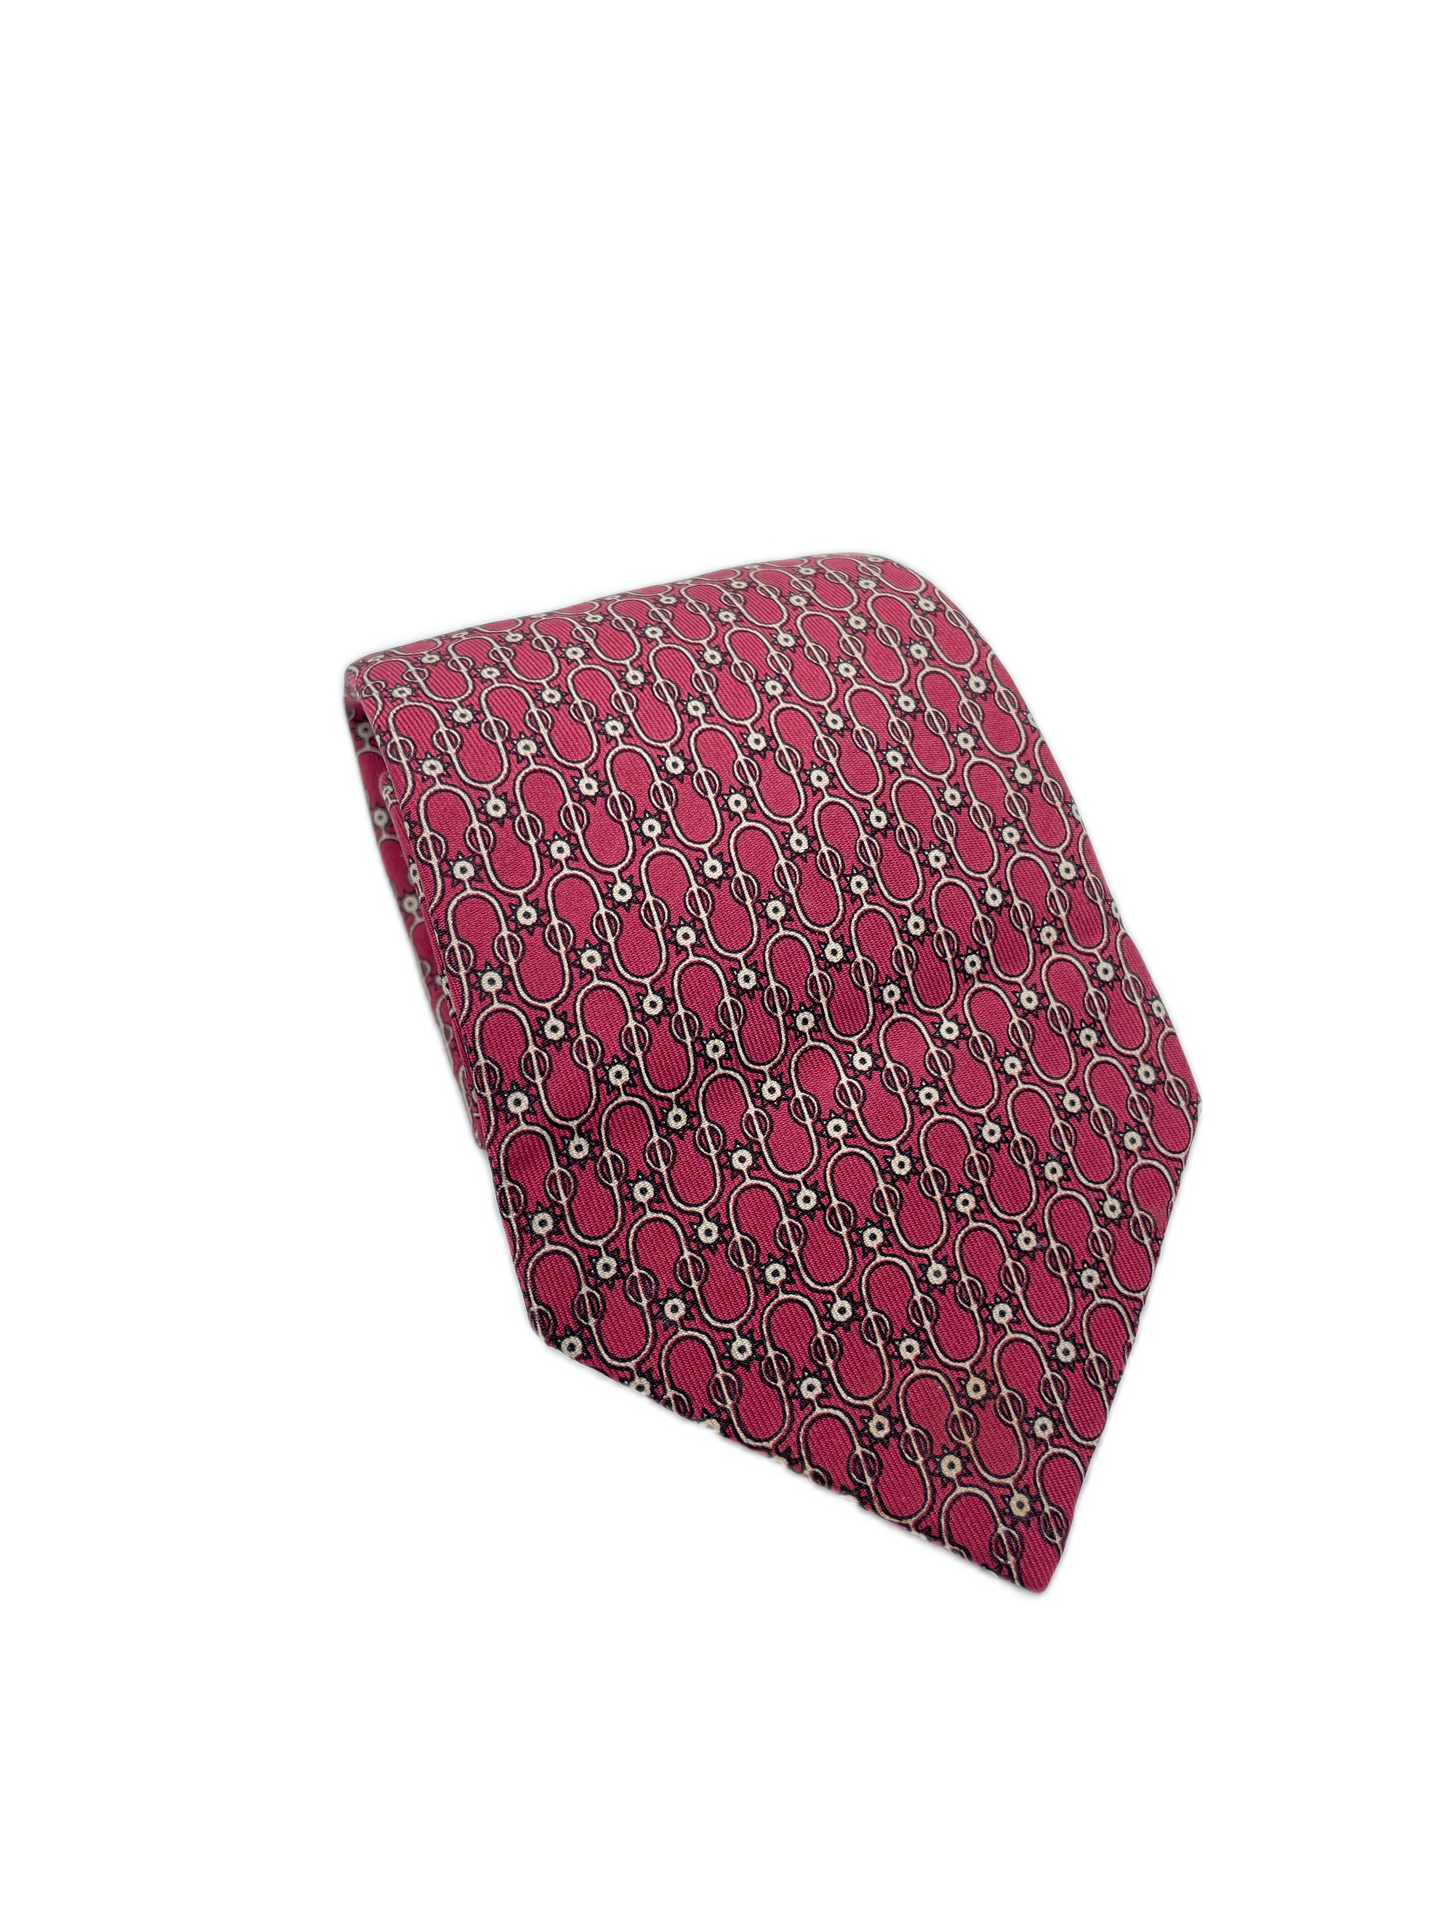 Cravatta Hermès stampa geometrica sfondo rosso c.743FA